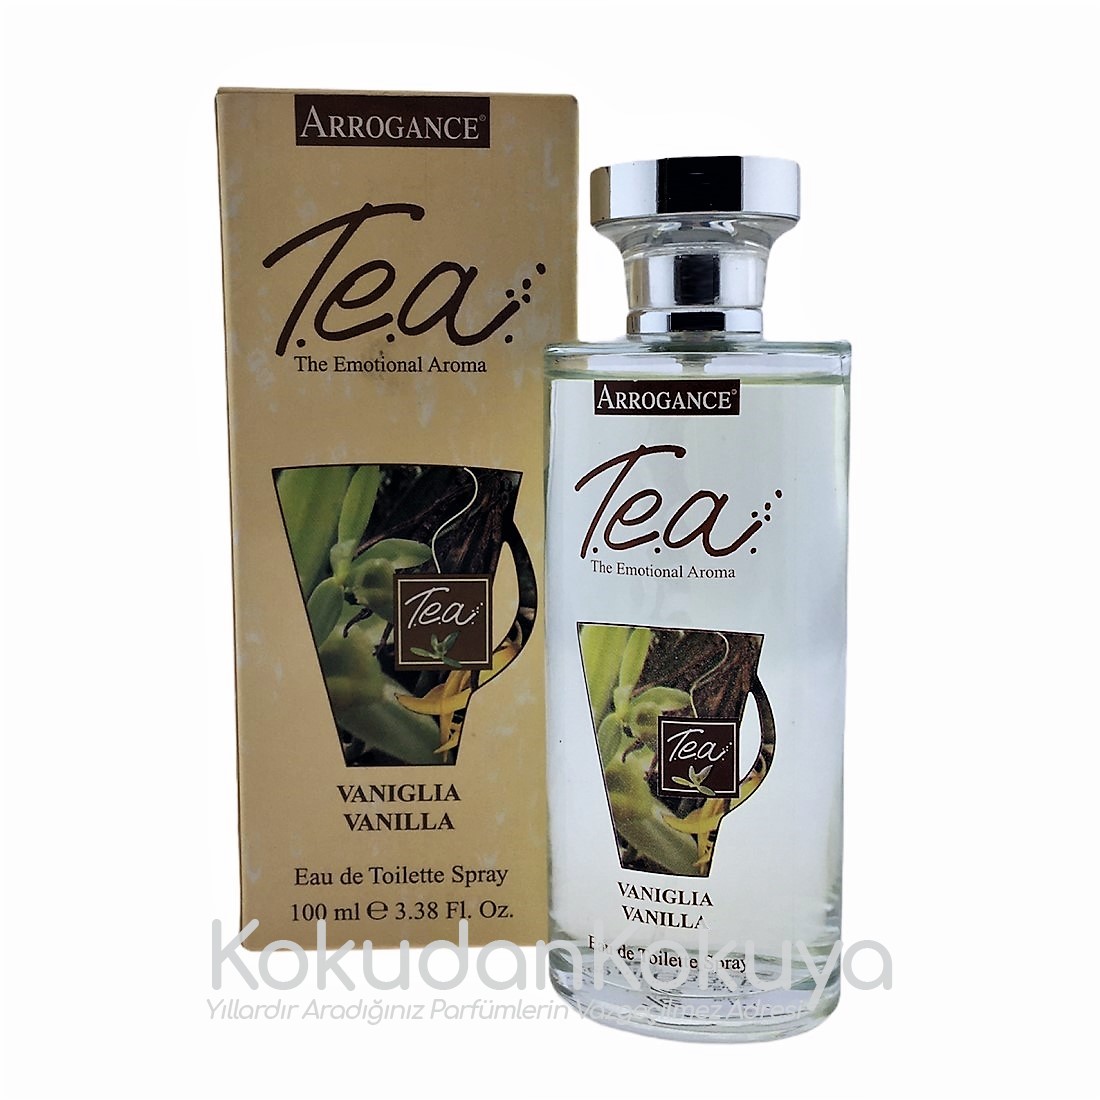 SCHIAPPARELLI PIKENZ Arrogance T.e.a Vanilla Perfume (Vintage) Parfüm Kadın 100ml Eau De Toilette (EDT) Sprey 